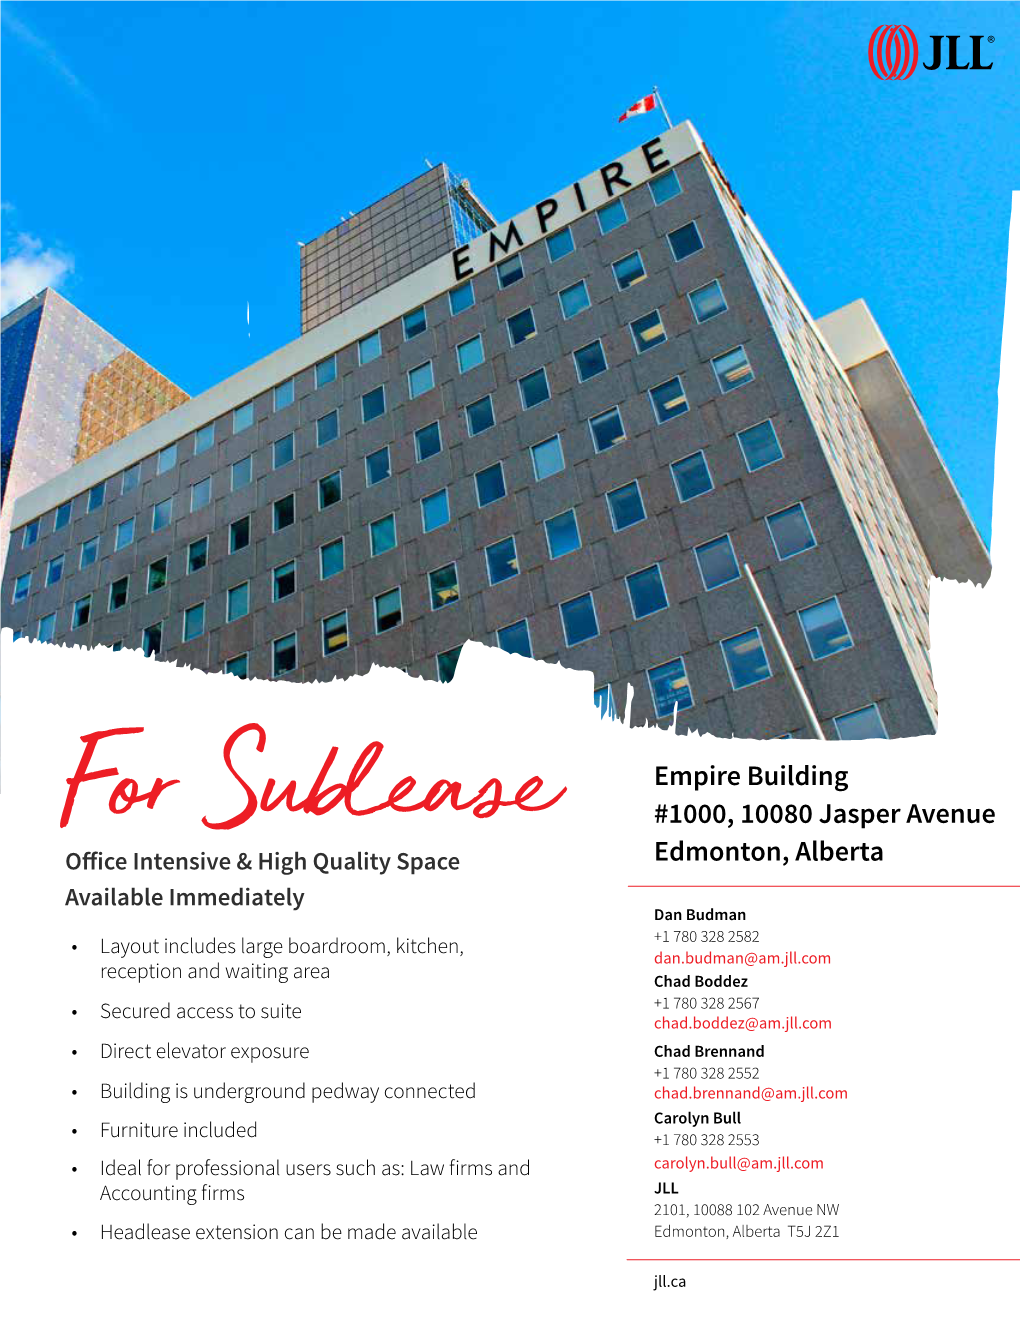 For Sublease Empire Building #1000, 10080 Jasper Avenue Edmonton, Alberta